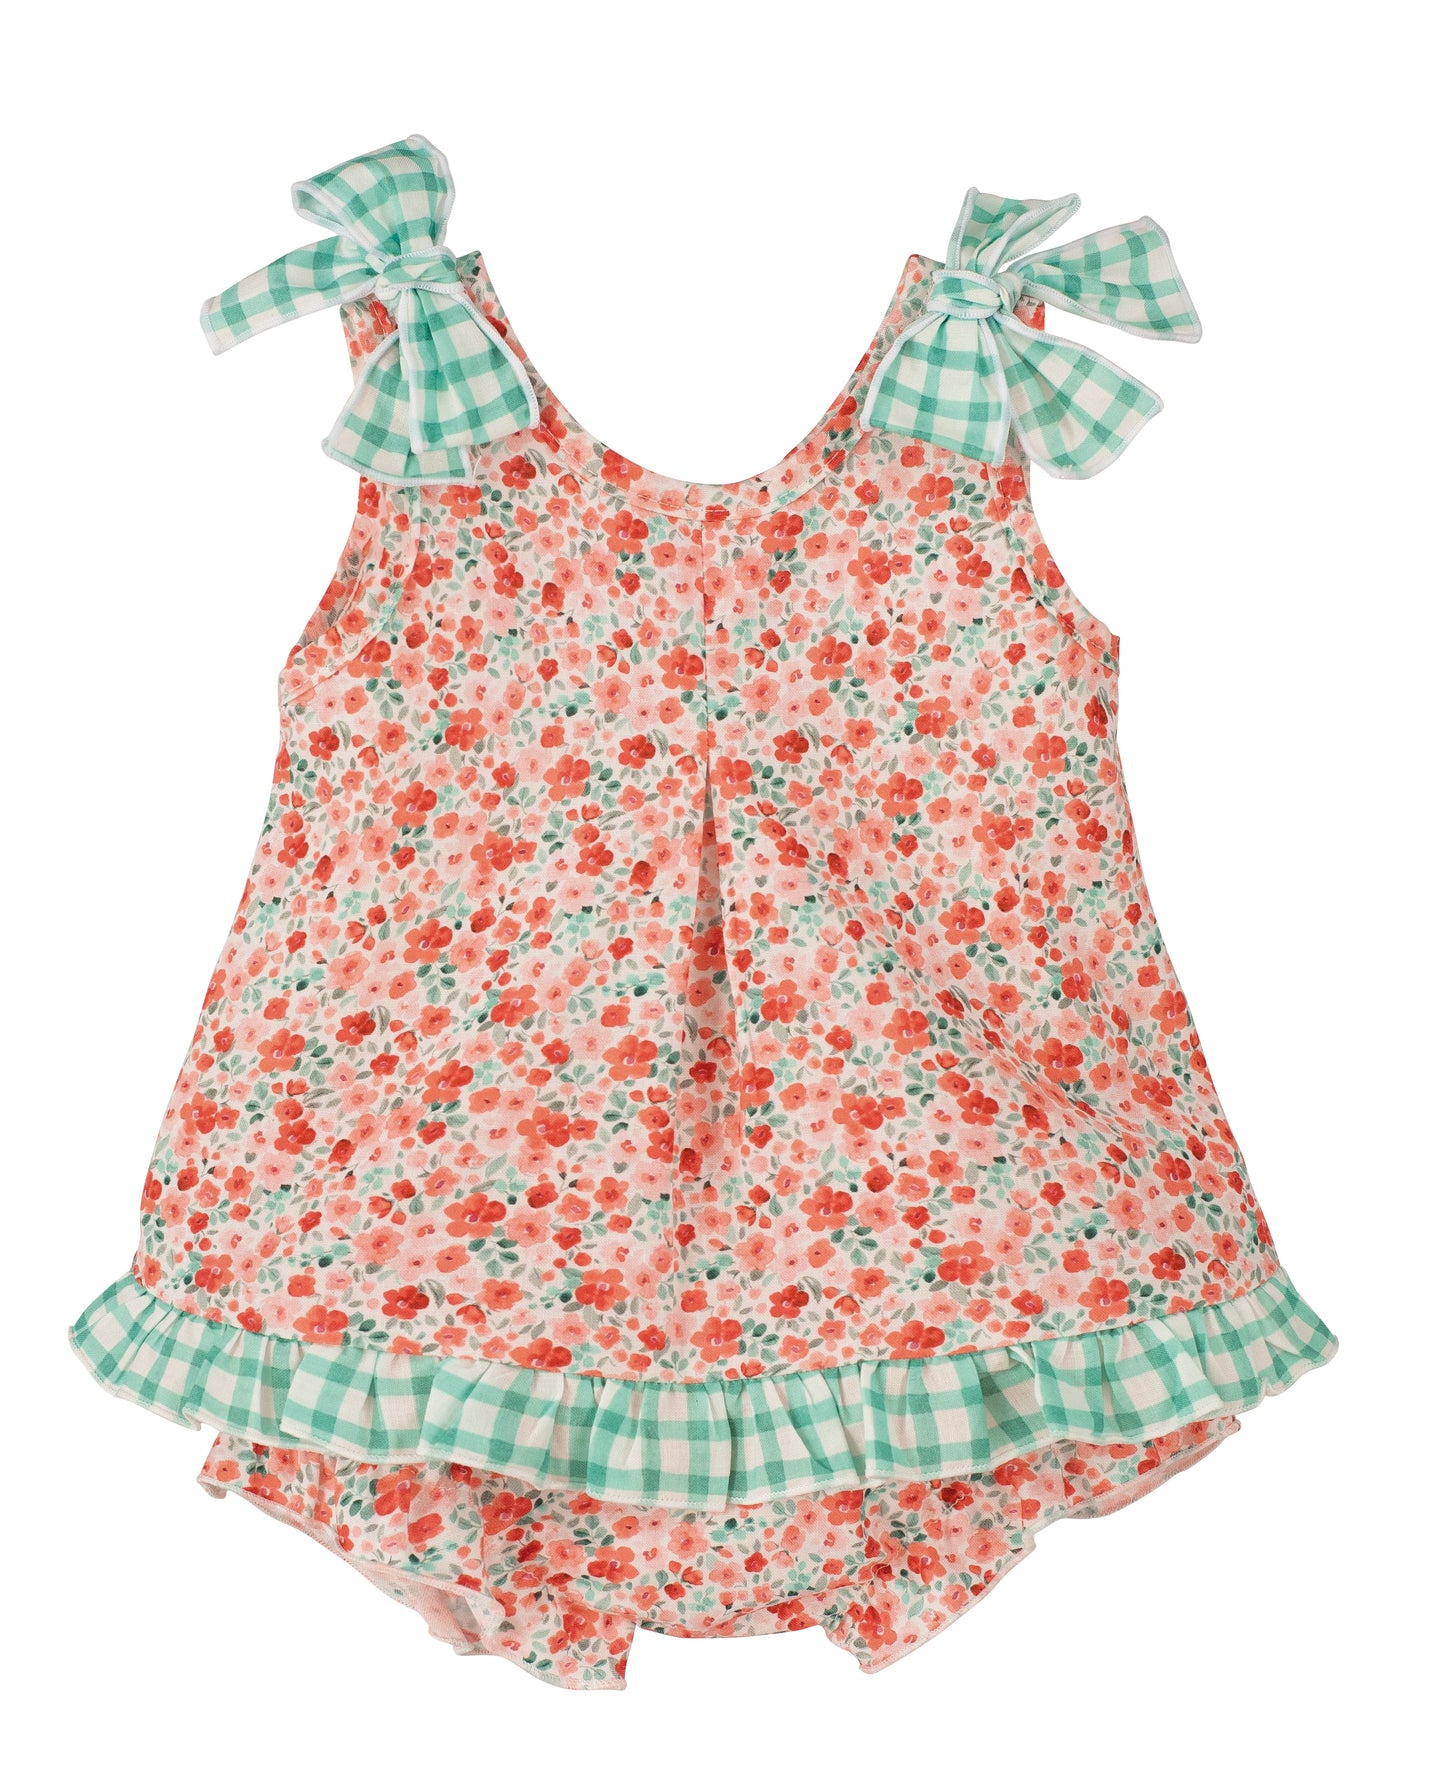 CALAMARO Prunela Baby Girls Mint Floral Jam Pant Set - 25055